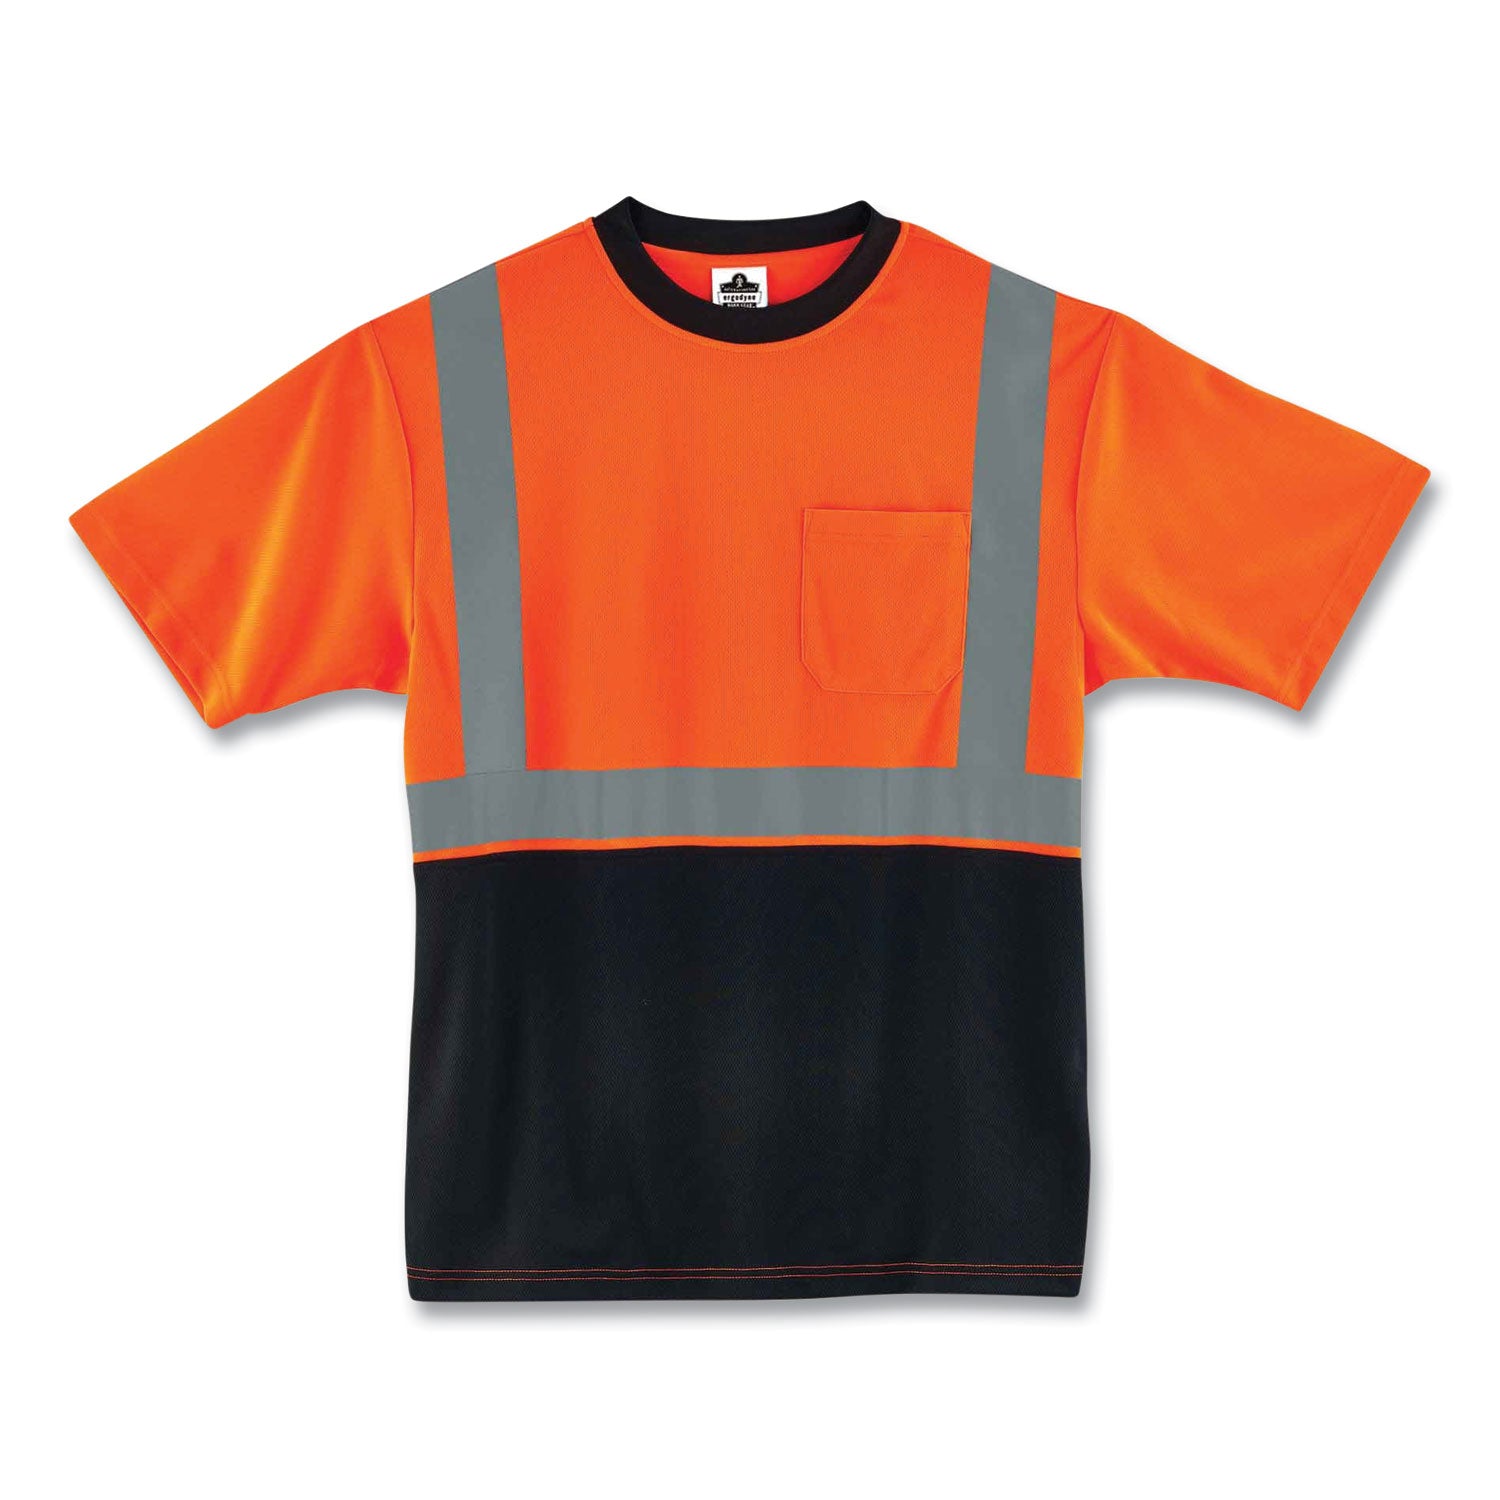 glowear-8289bk-class-2-hi-vis-t-shirt-with-black-bottom-5x-large-orange-ships-in-1-3-business-days_ego22519 - 1